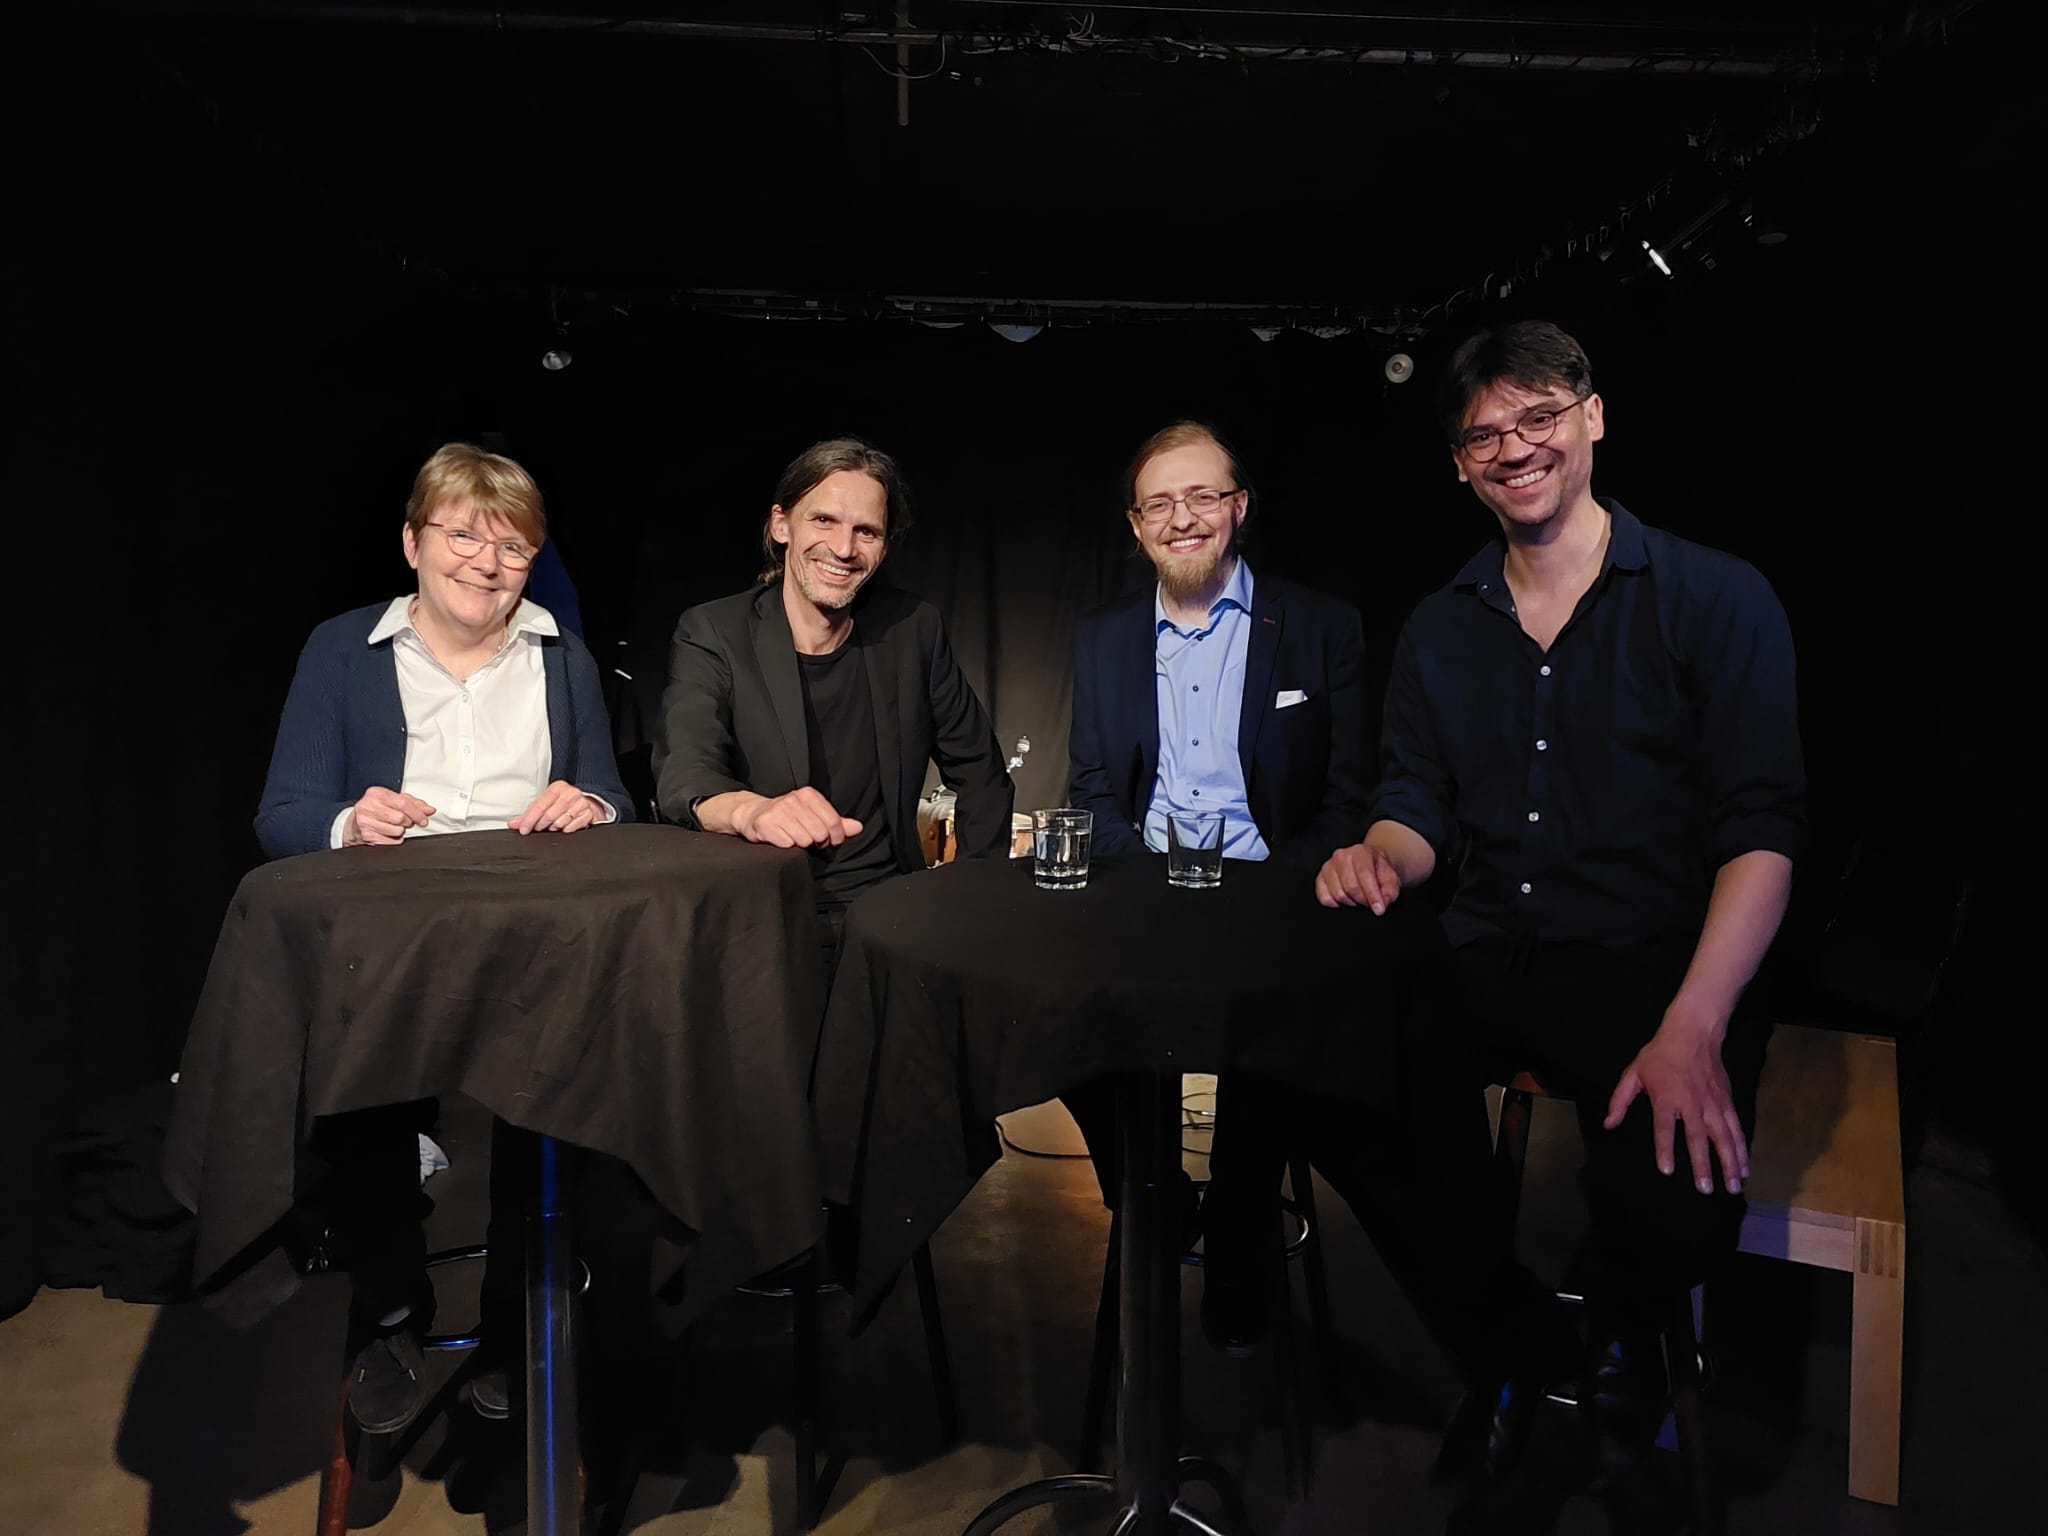 Podium discussion on exoplanet exploration. Left to right: Ruth Titz-Weider, Arthur Breitsprecher, Ludwig Scheibe, Christian Korthals.